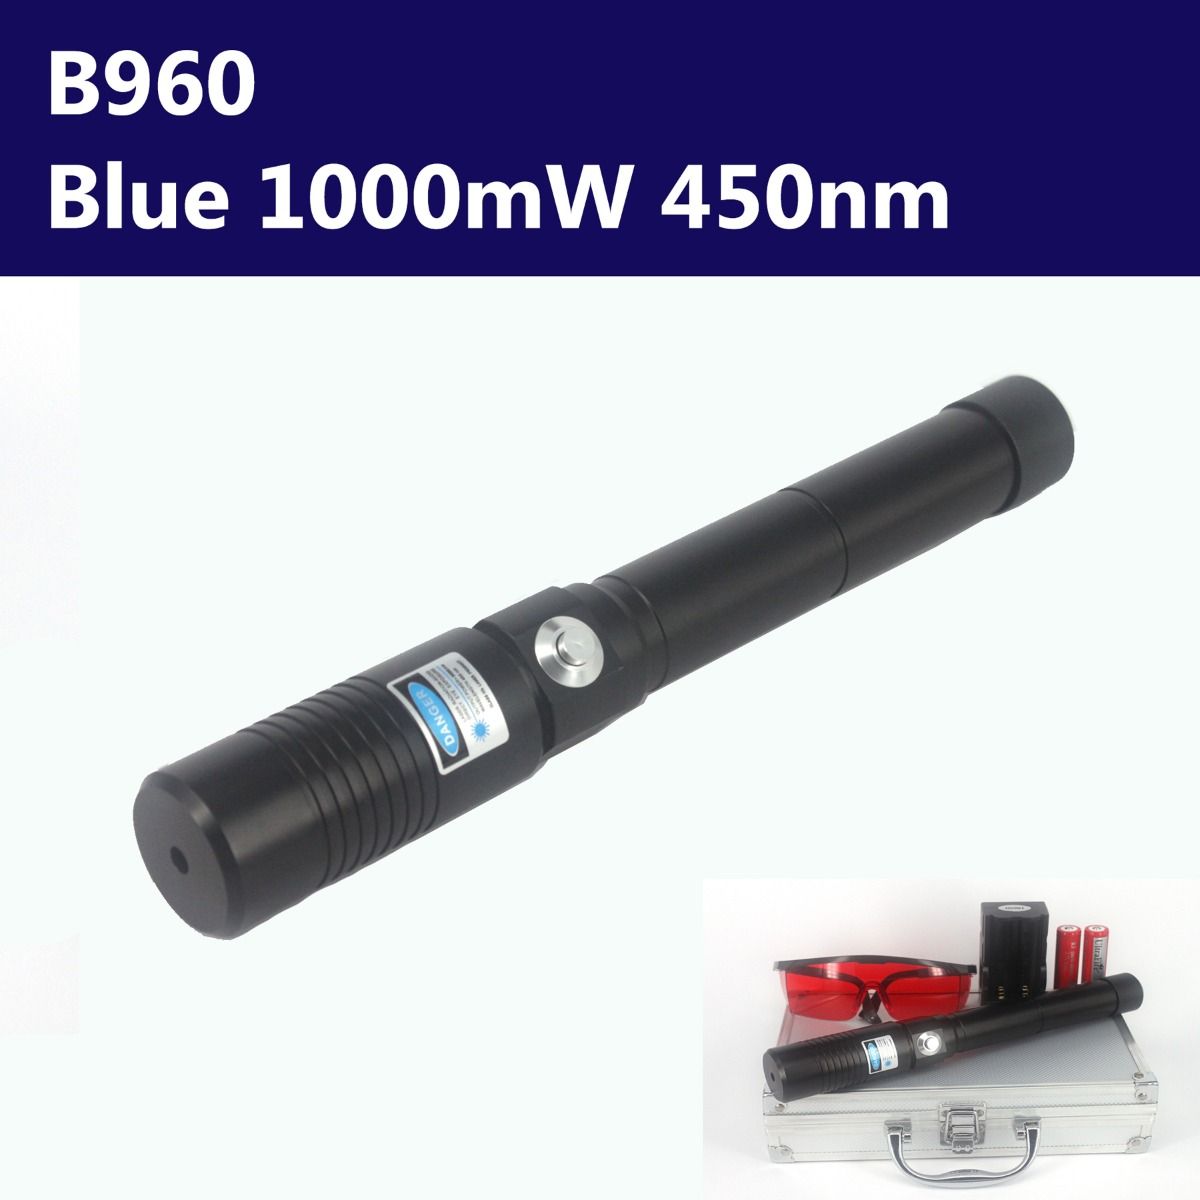 1000mW 450nm Blue High Power Burning Laser Pointer - Flashlight Style -  B960 - Cool Laser Pointers